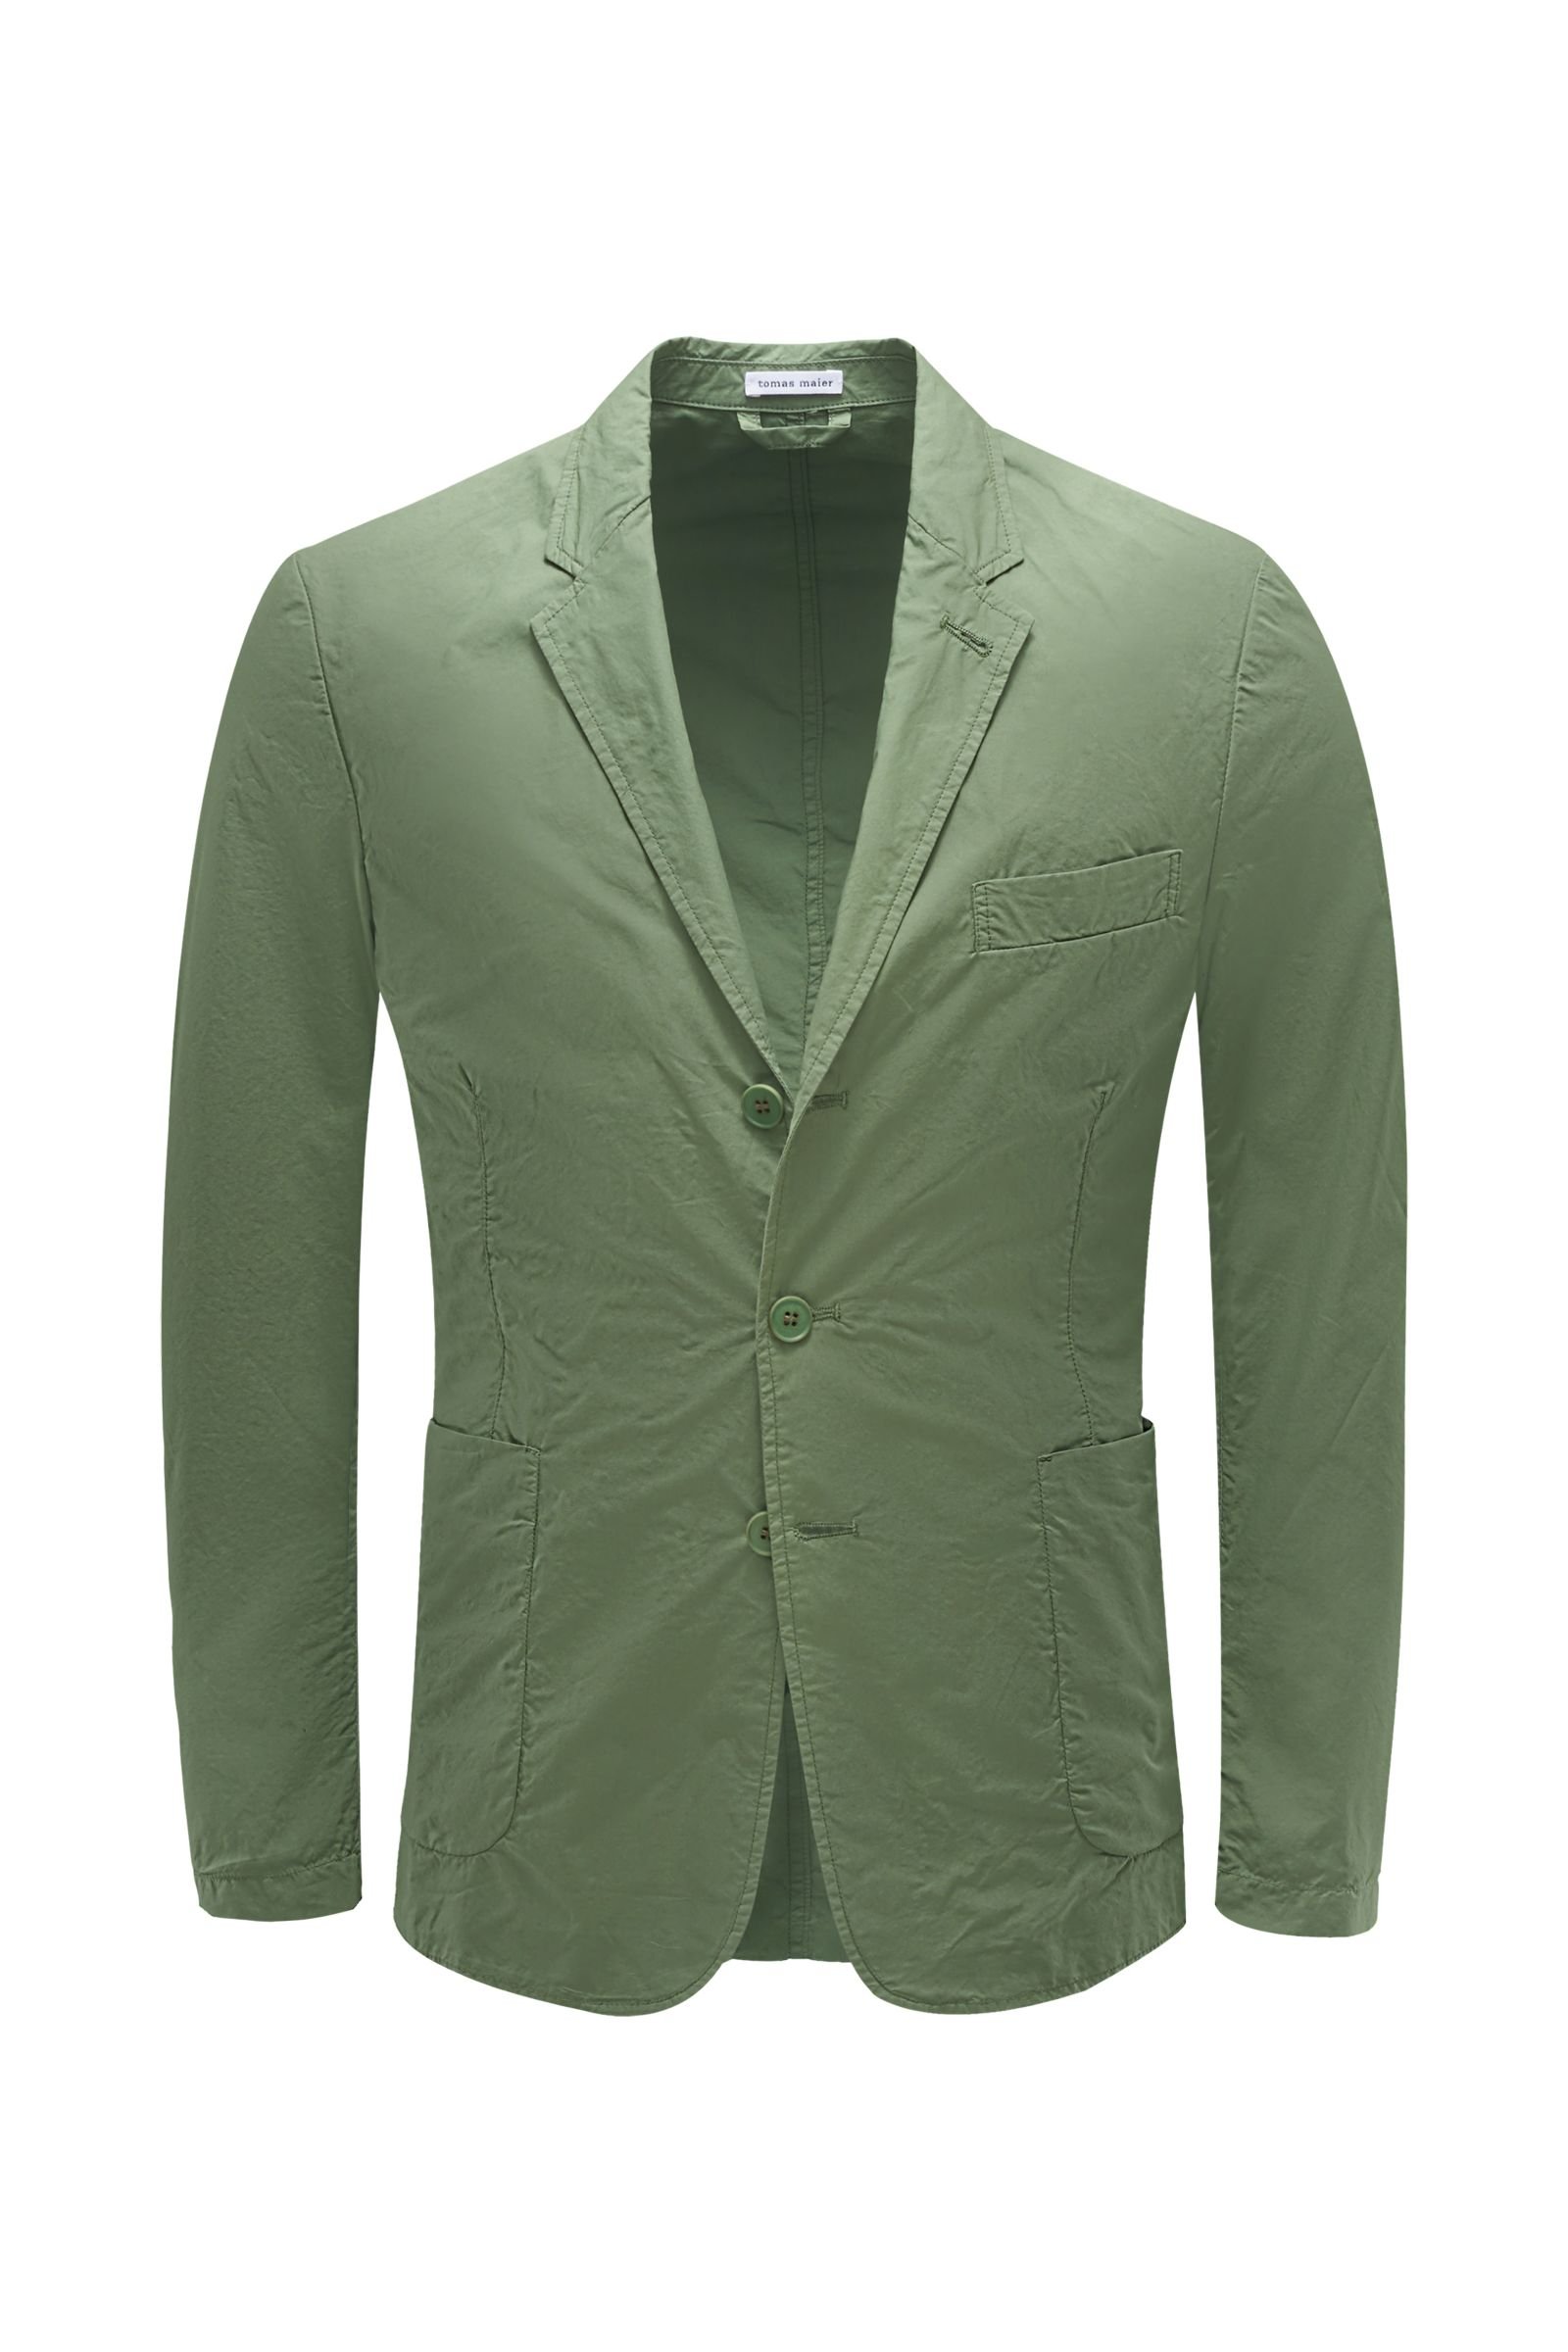 Smart-casual jacket green